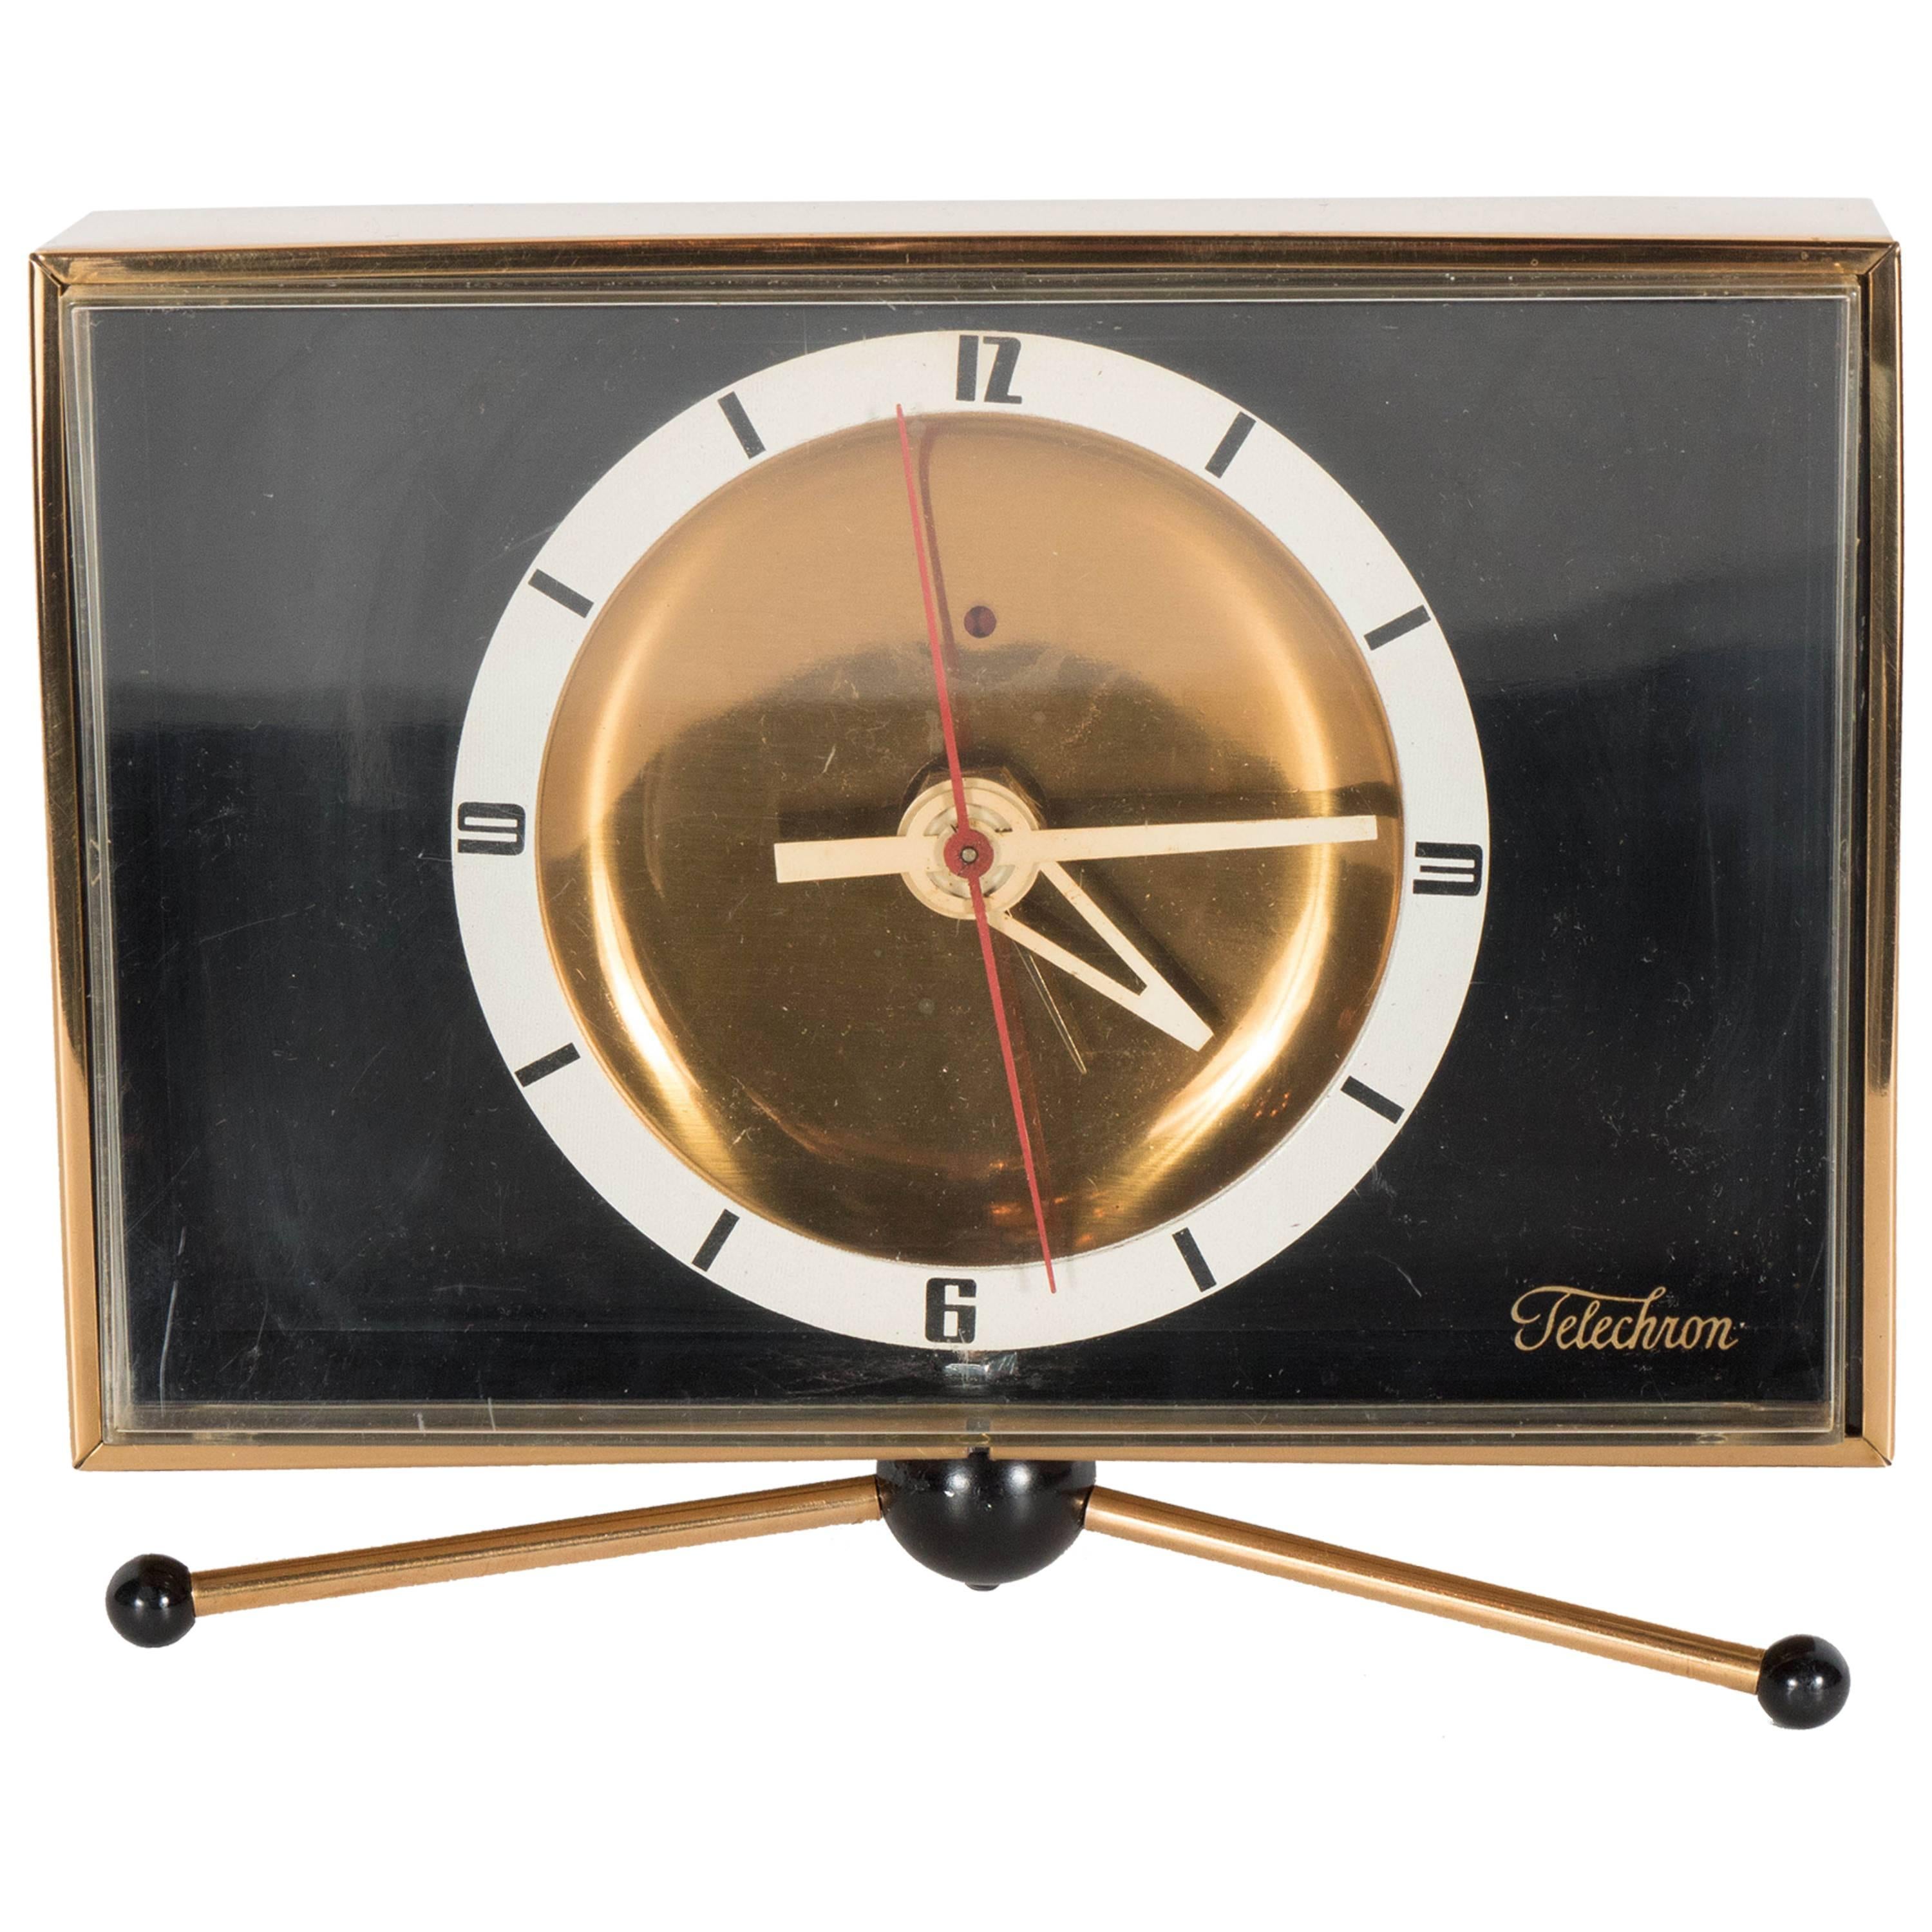 Sophisticated Mid-Century Modernist Brass Clock on Pedestal by Telechron